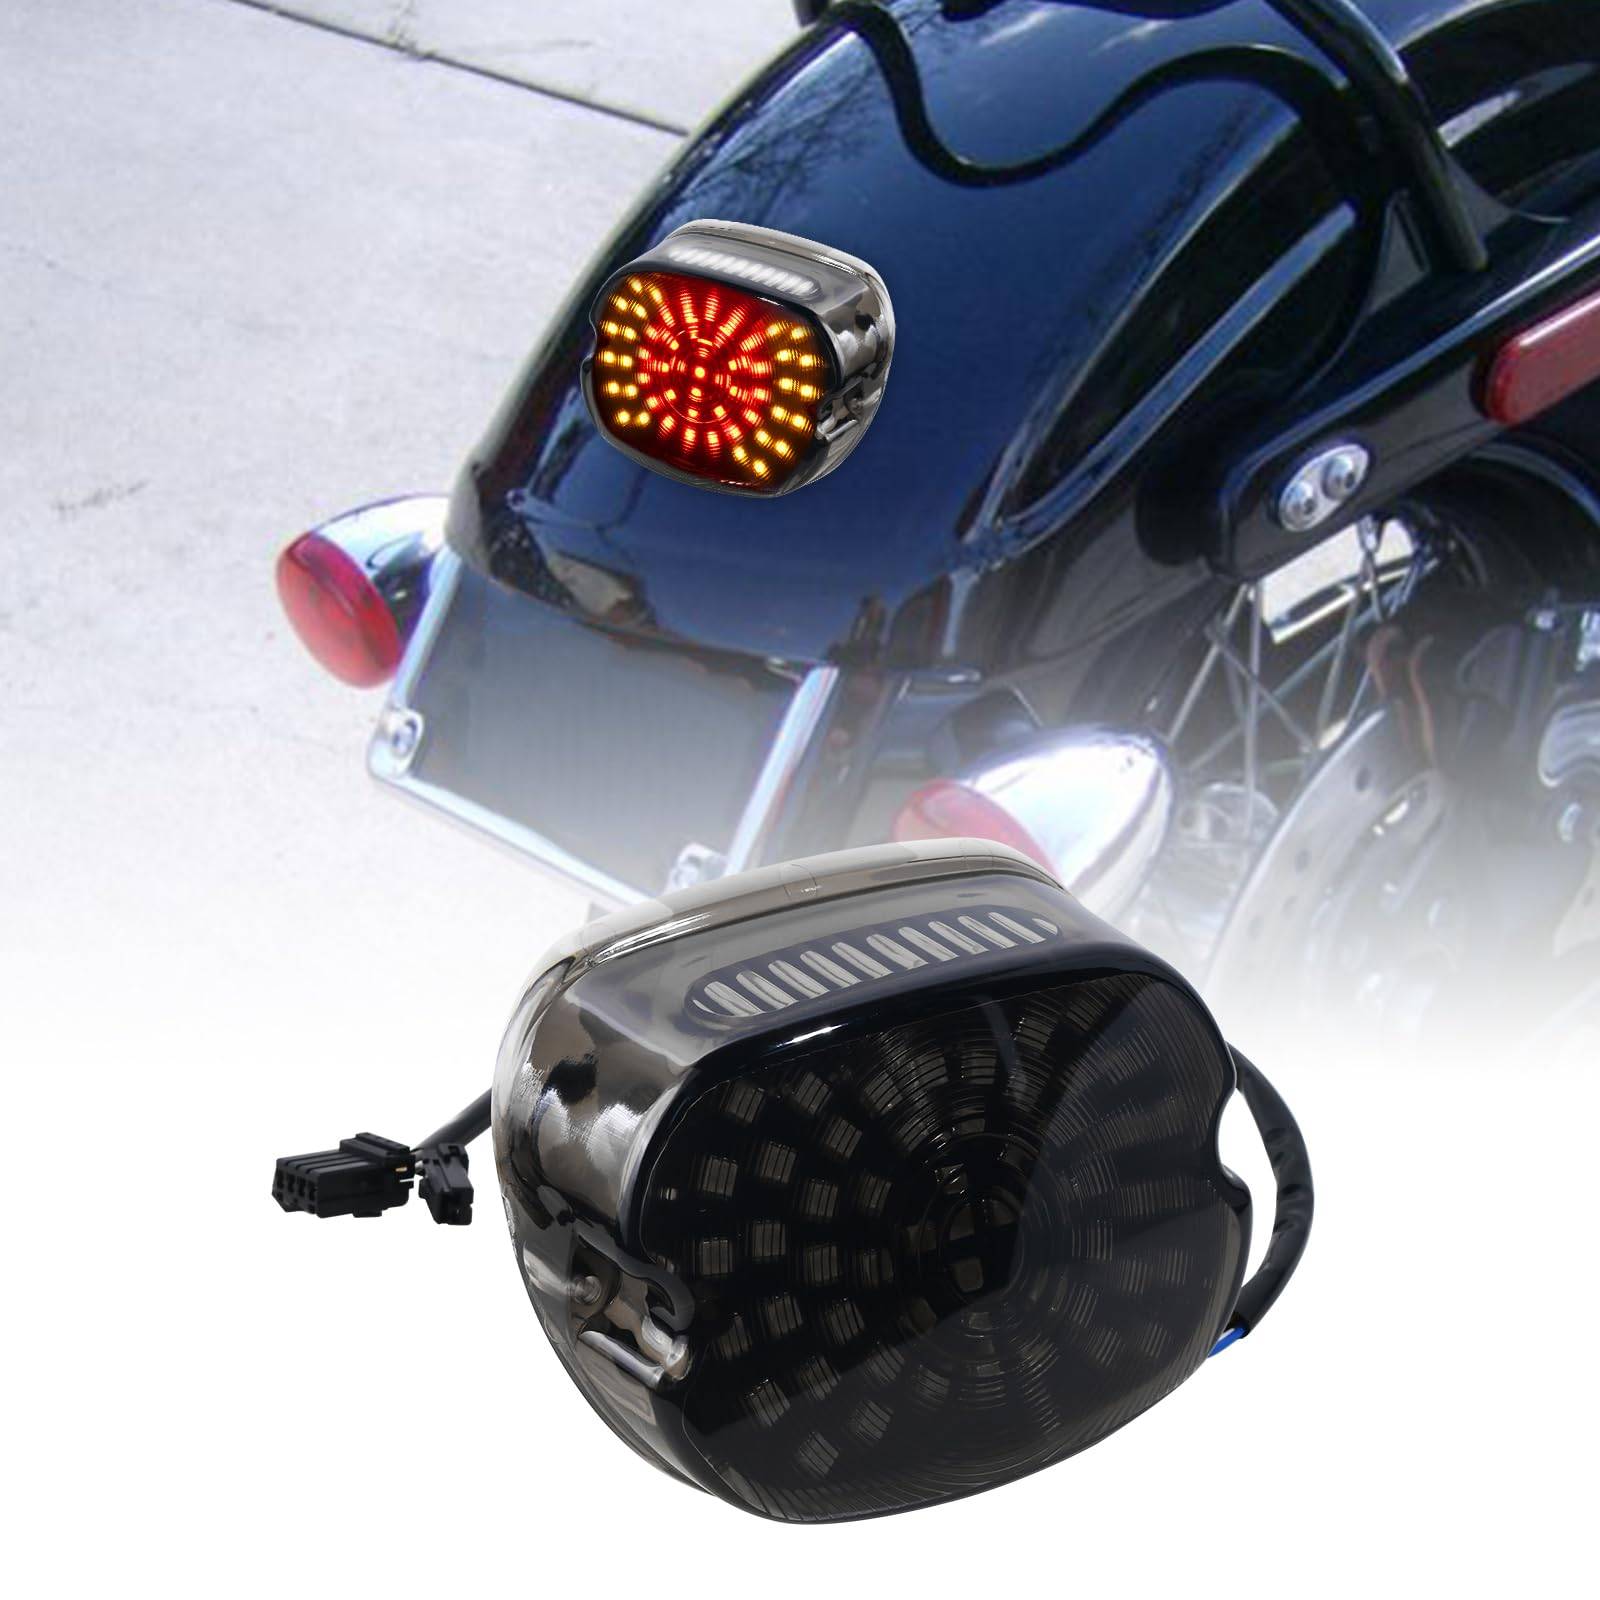 Harley-Davidson LED Tail Light & Turn Signals Combo for 1991-2010 Models